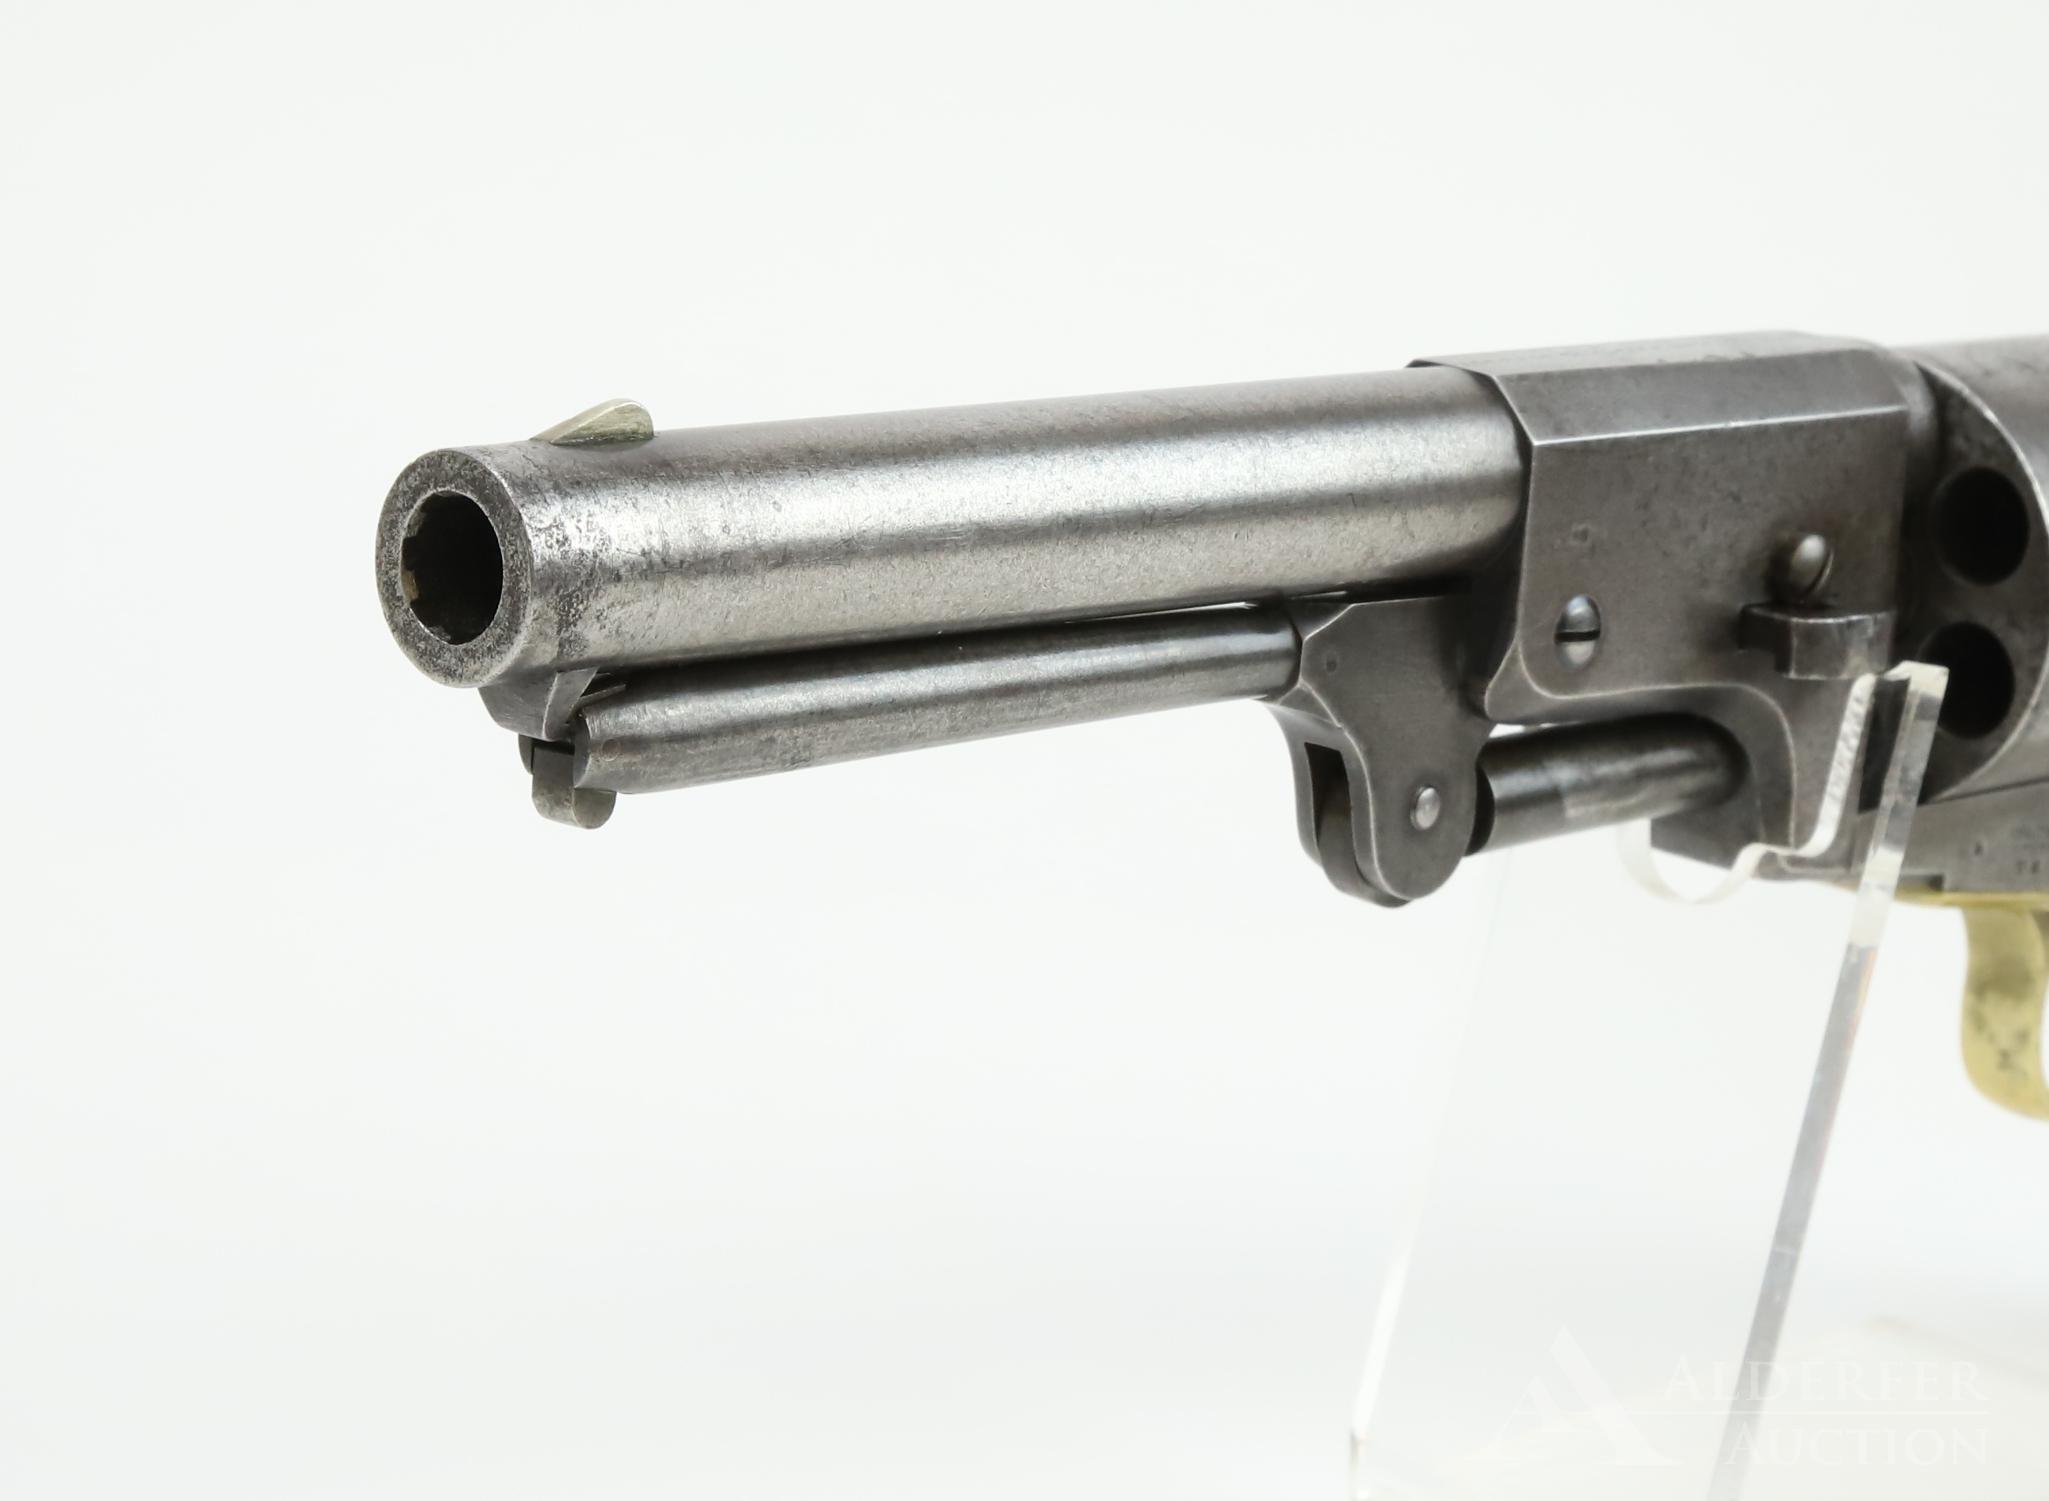 Colt Dragoon Revolver-2nd Model